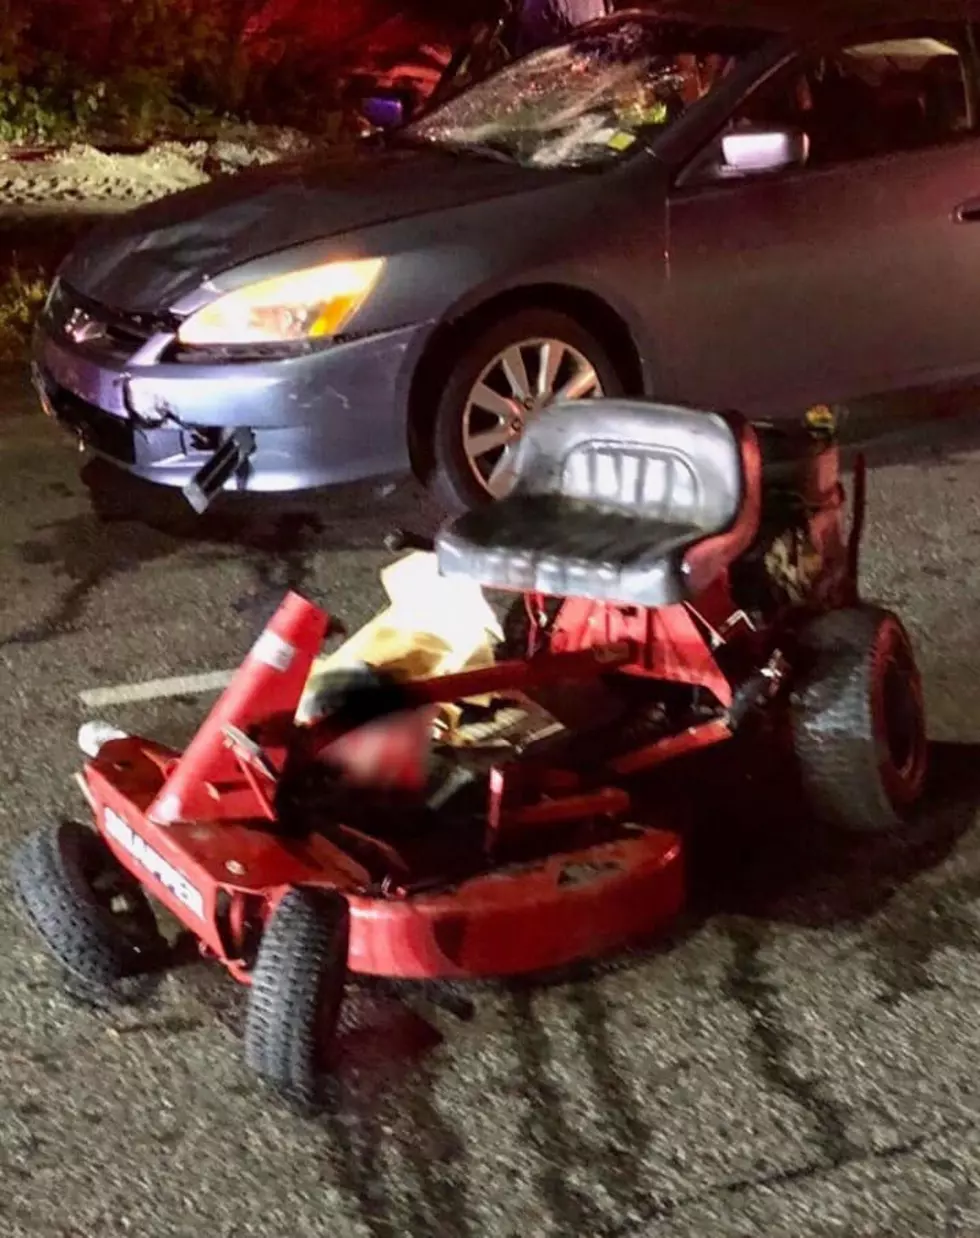 Hudson Valley Man Dies in Lawnmower Crash, Brother Very Hurt